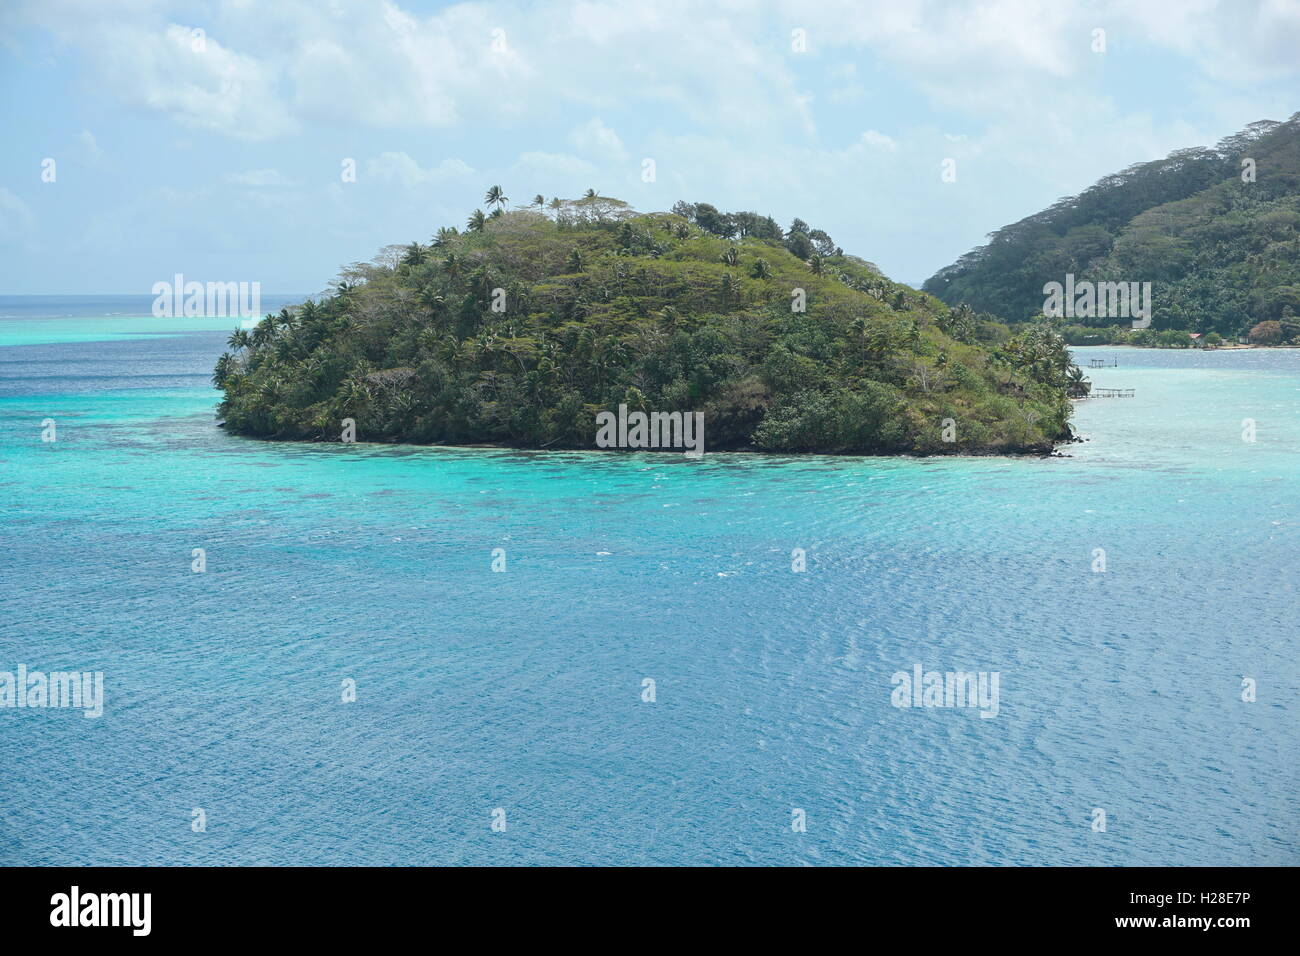 High view of a tropical island with lush vegetation, Huahine lagoon, motu Vaiorea, Bourayne bay, Pacific ocean, French Polynesia Stock Photo